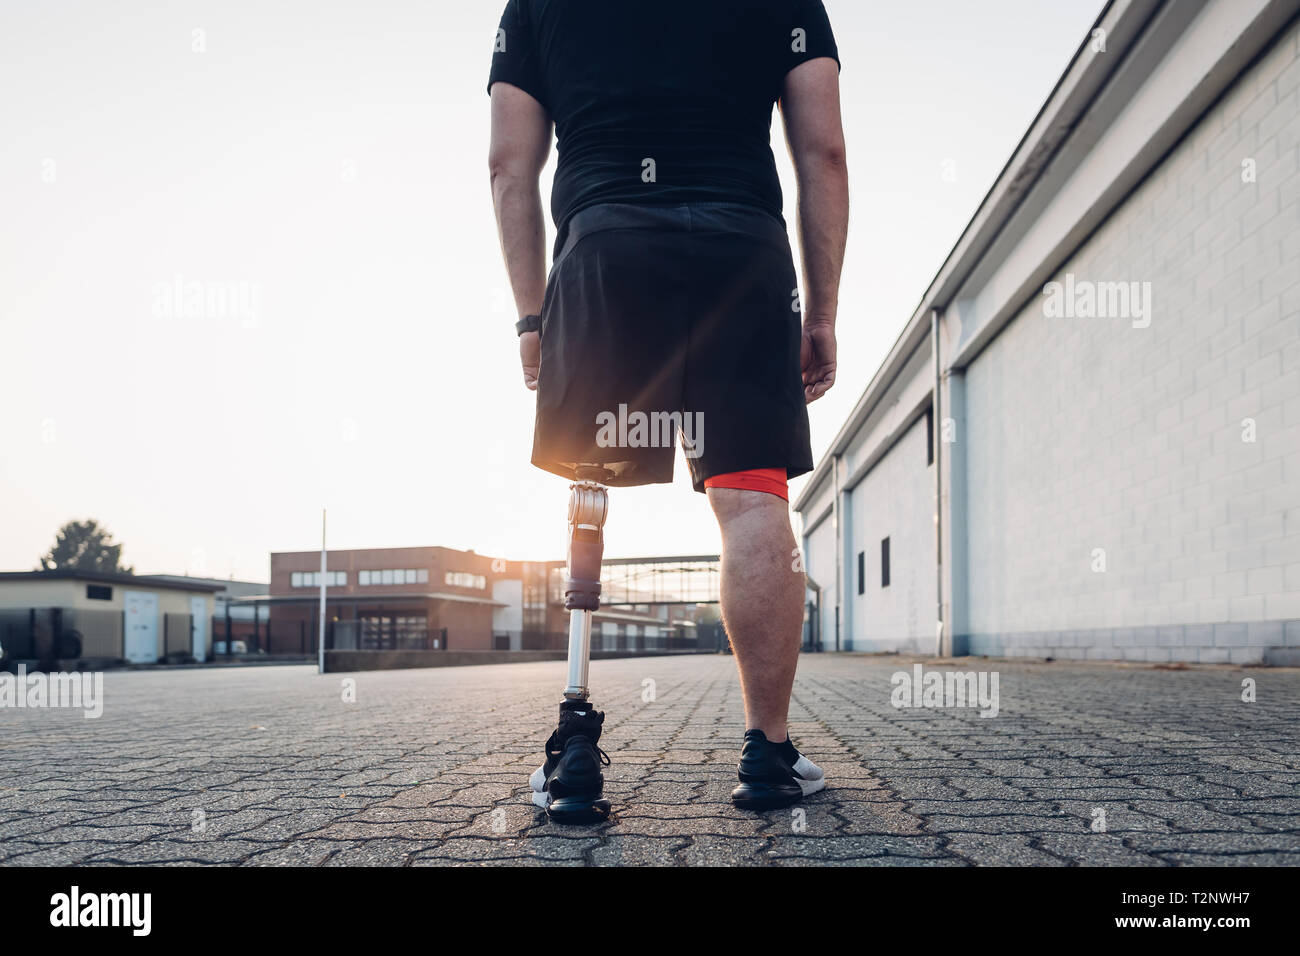 Man with prosthetic leg walking Stock Photo